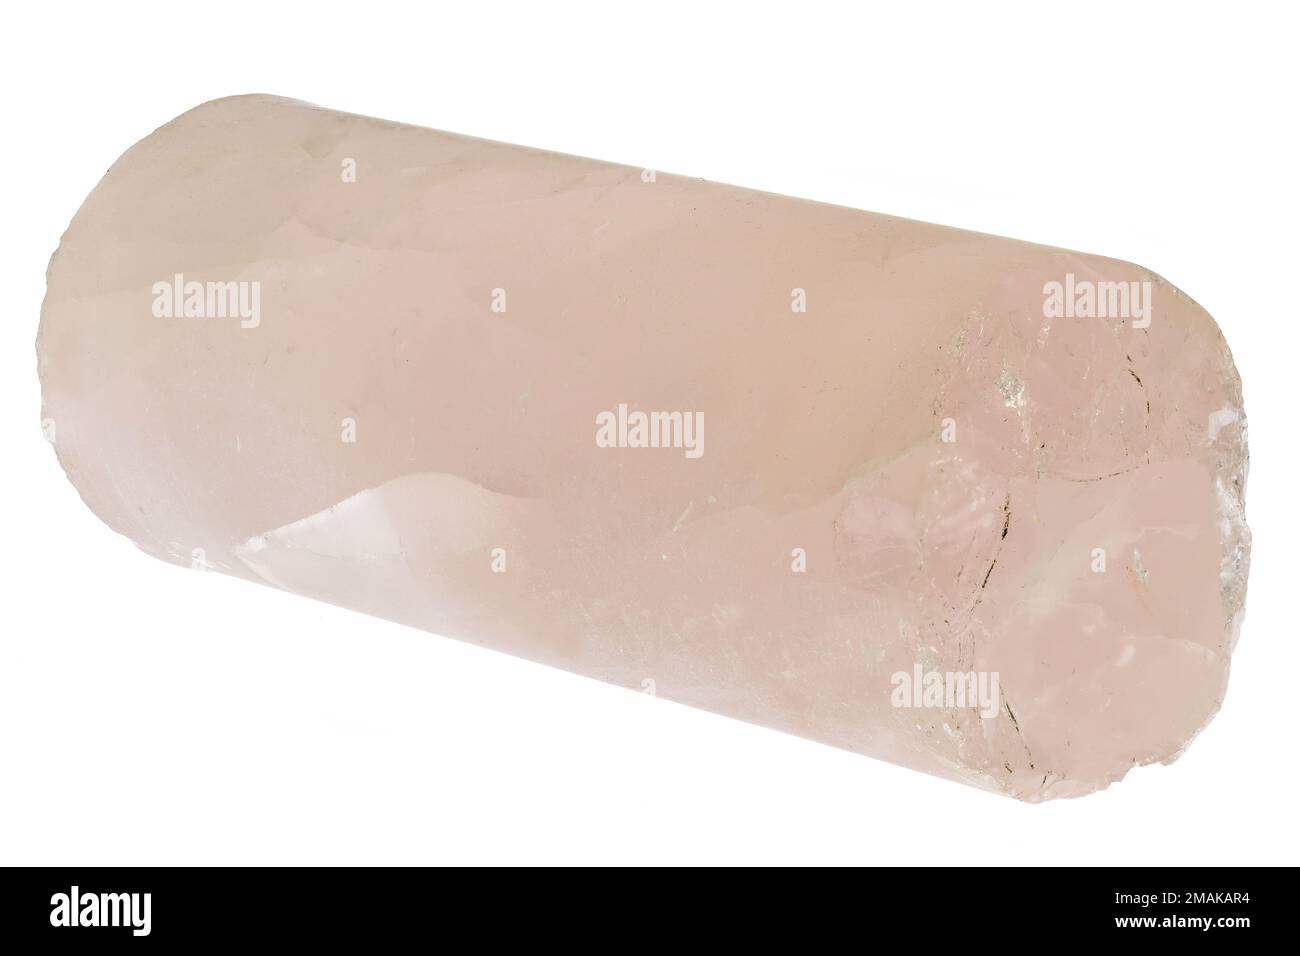 rose quartz drill core isolated on white background Stock Photo